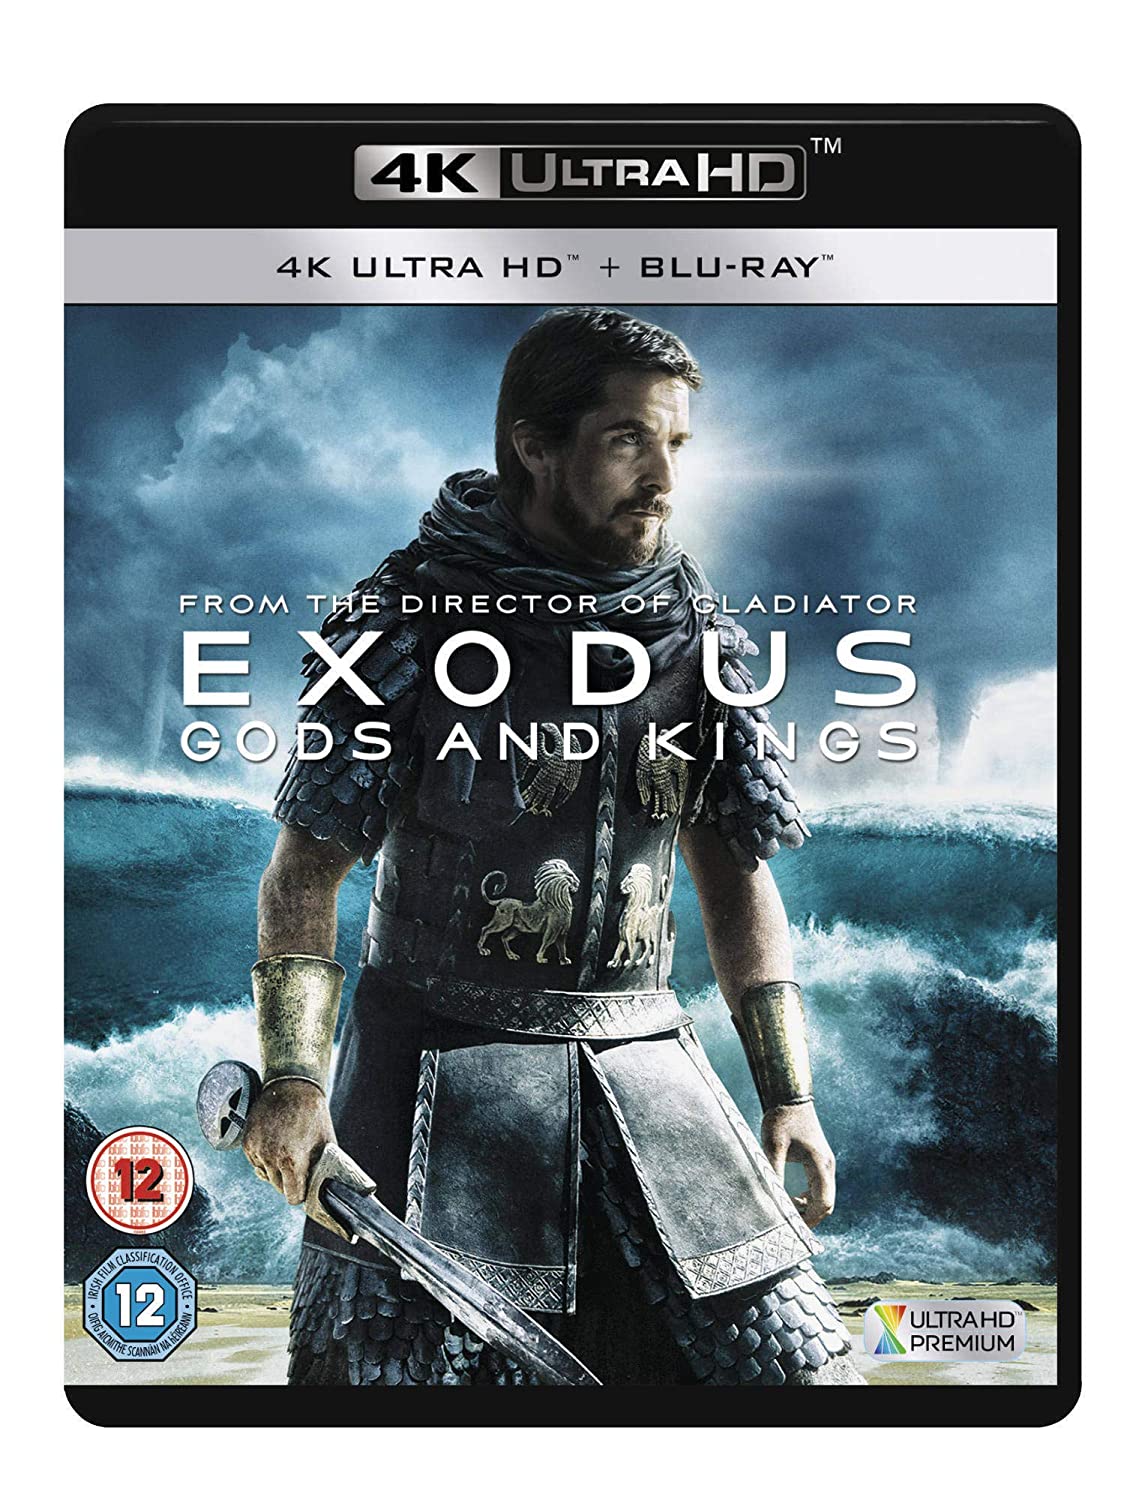 Stiahni si UHD Filmy EXODUS: Bohove a kralove / Exodus: Gods and Kings (2014)(CZ/EN)[HEVC 2160p WebRip] = CSFD 62%